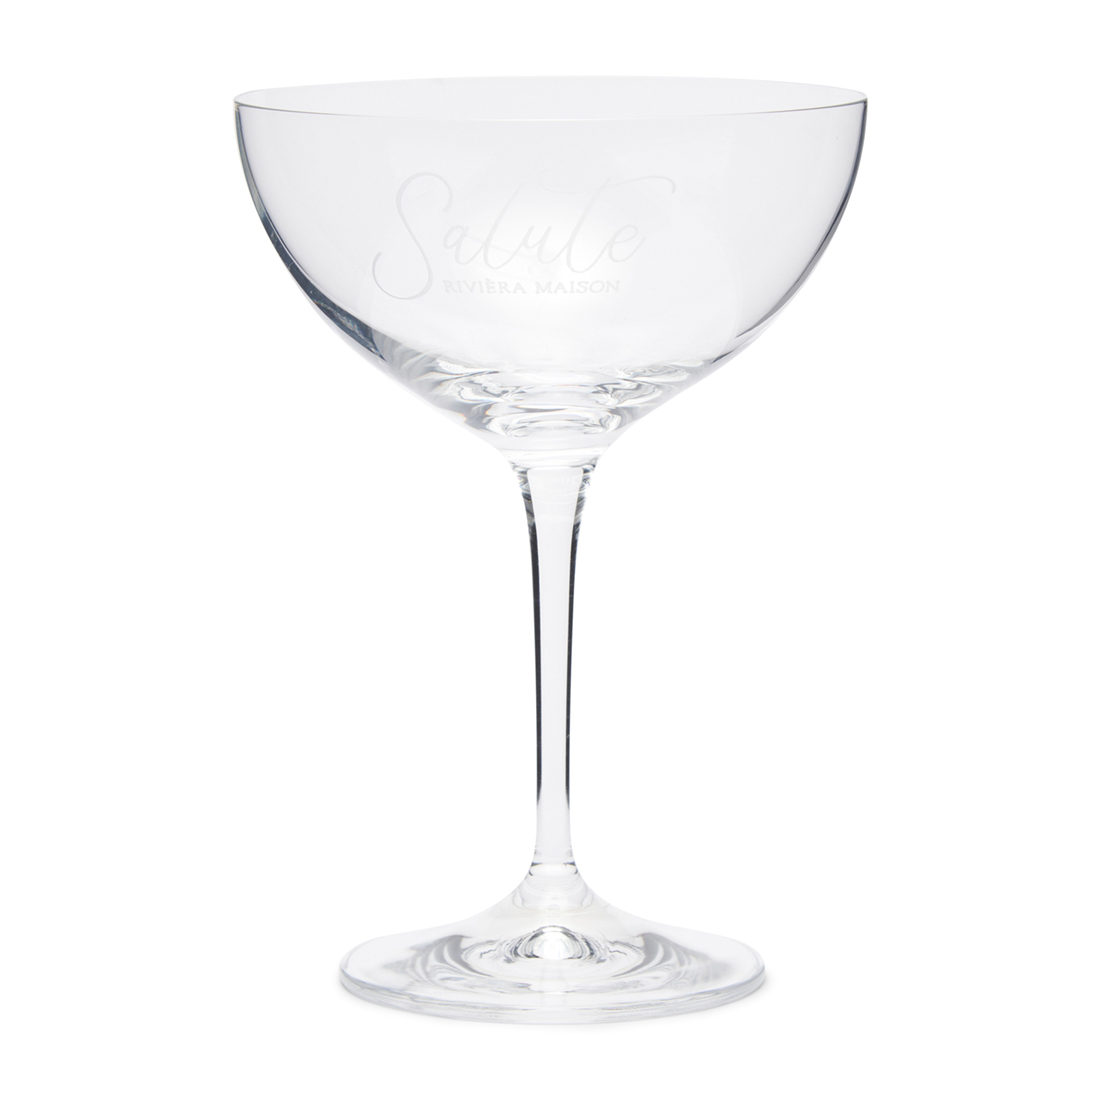 Riviera Maison champagnecoupe, ChampagneGlas Salute Coupe - Transparant - Glas 290 ML - 1 stuk